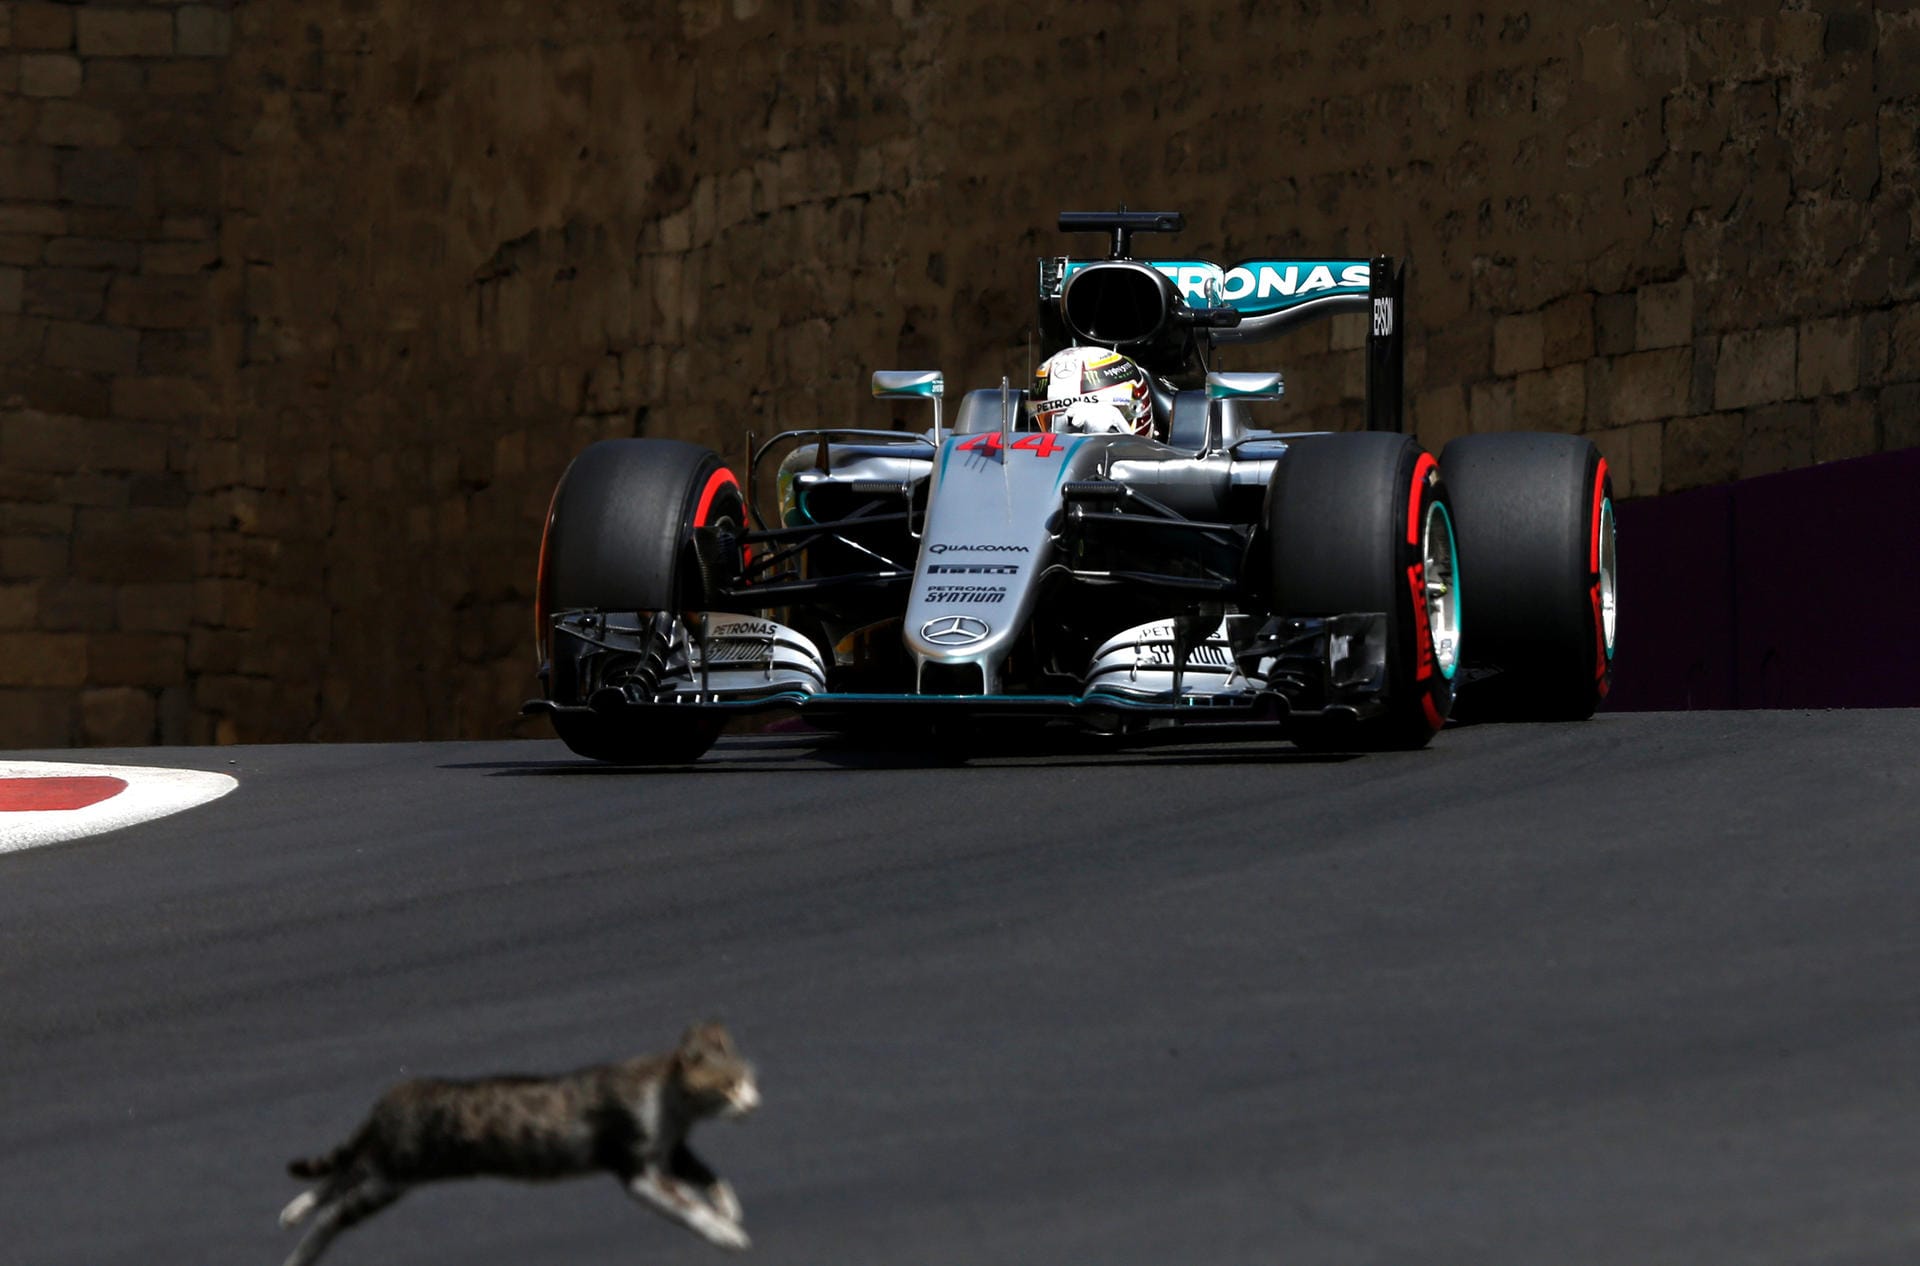 Lebensmüde: Ein Katze kreuzt den Weg des heranrasenden Lewis Hamilton.